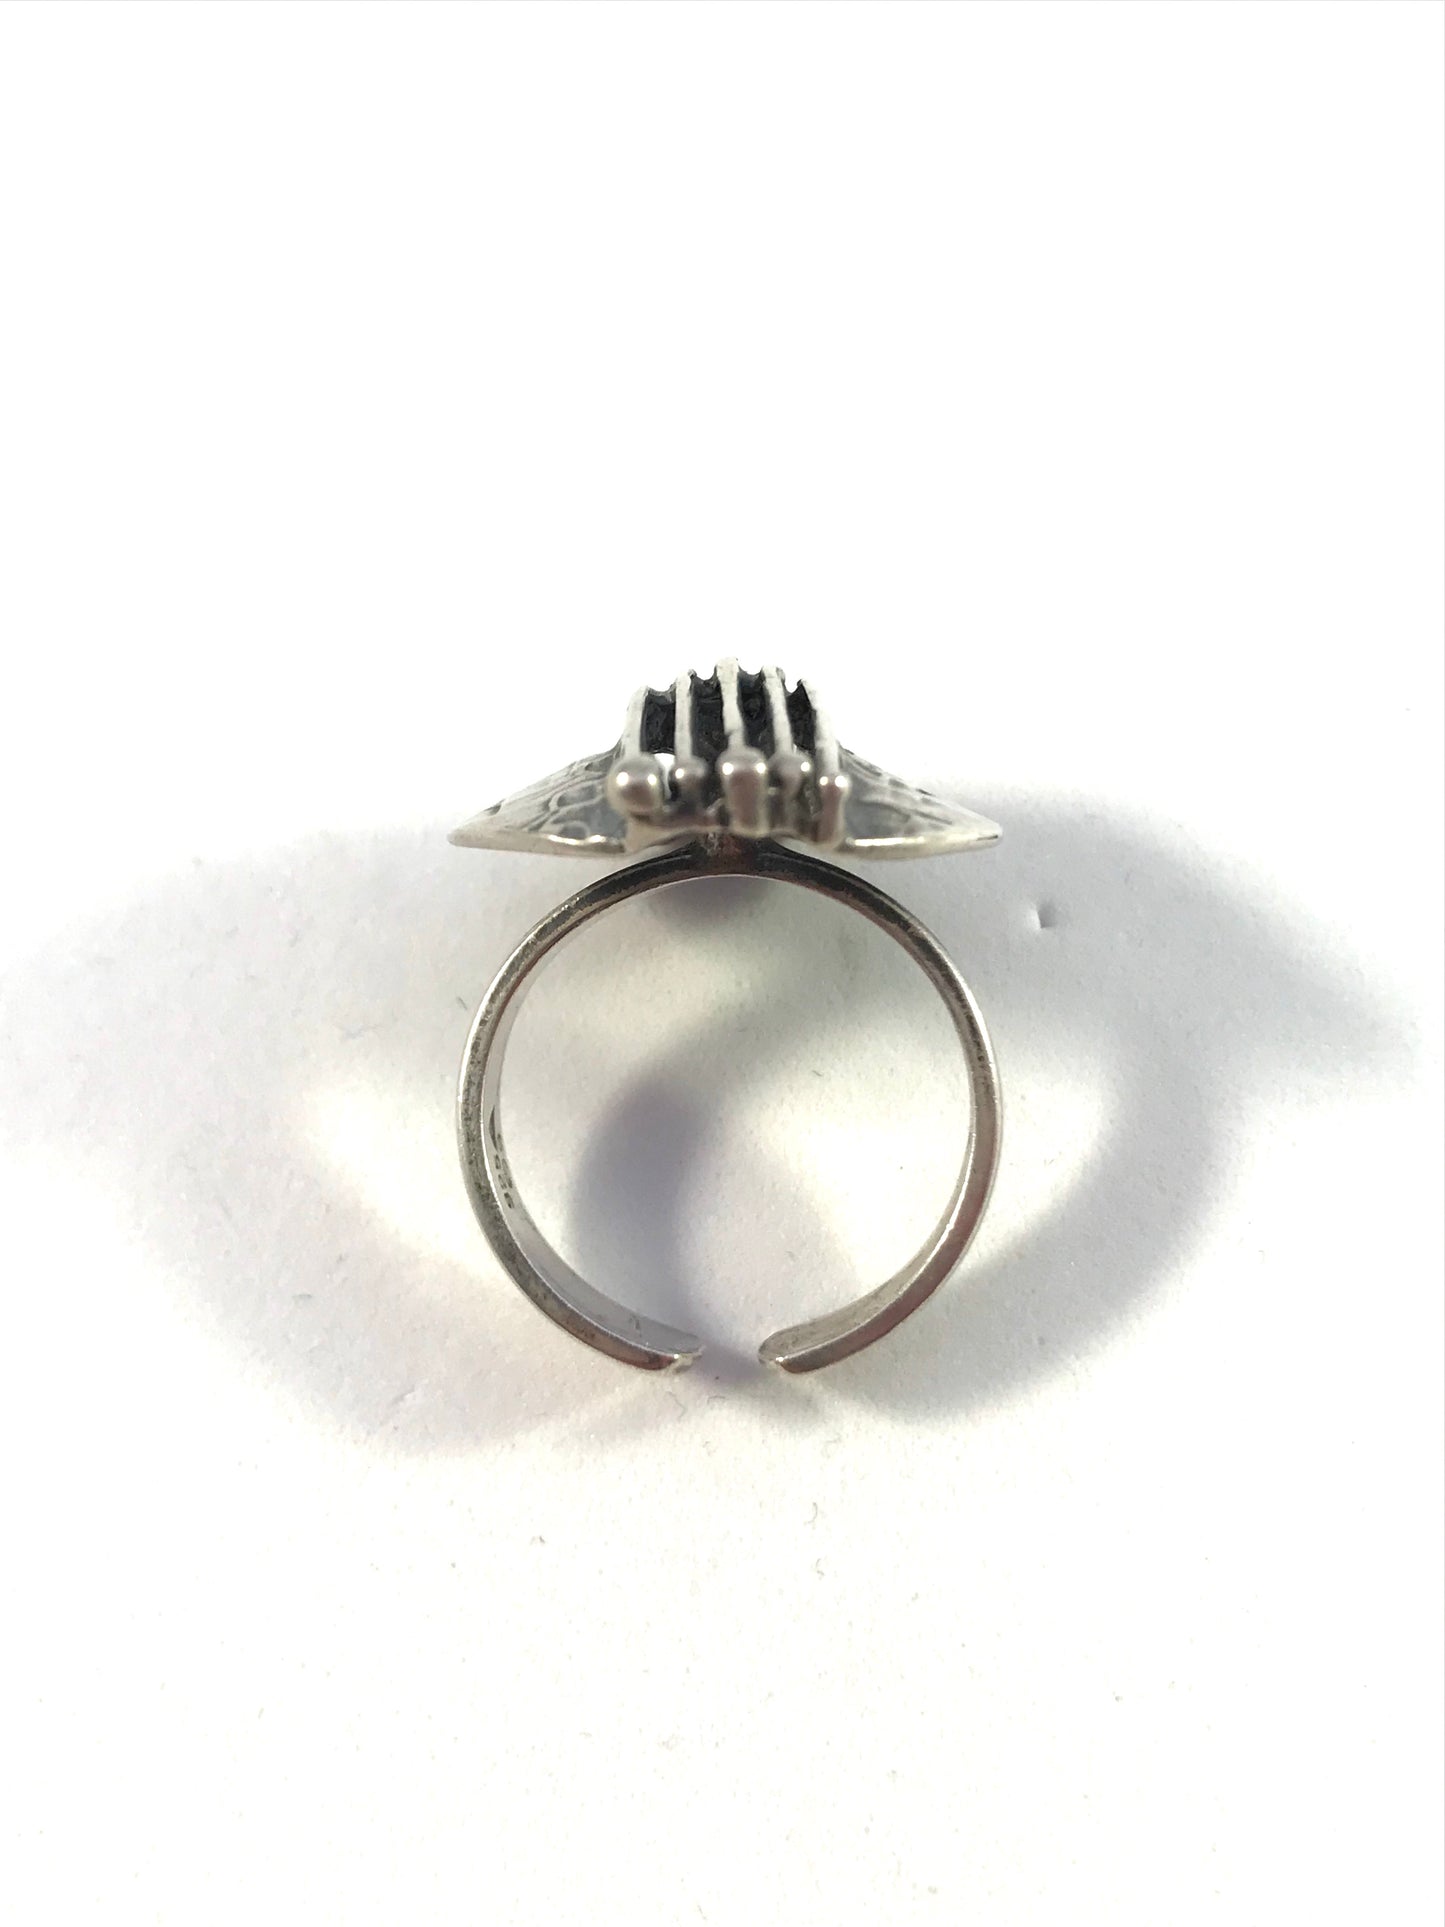 Teka, Theodor Klotz, Germany 1960s Modernist Sterling Silver Adjustable Size Ring.